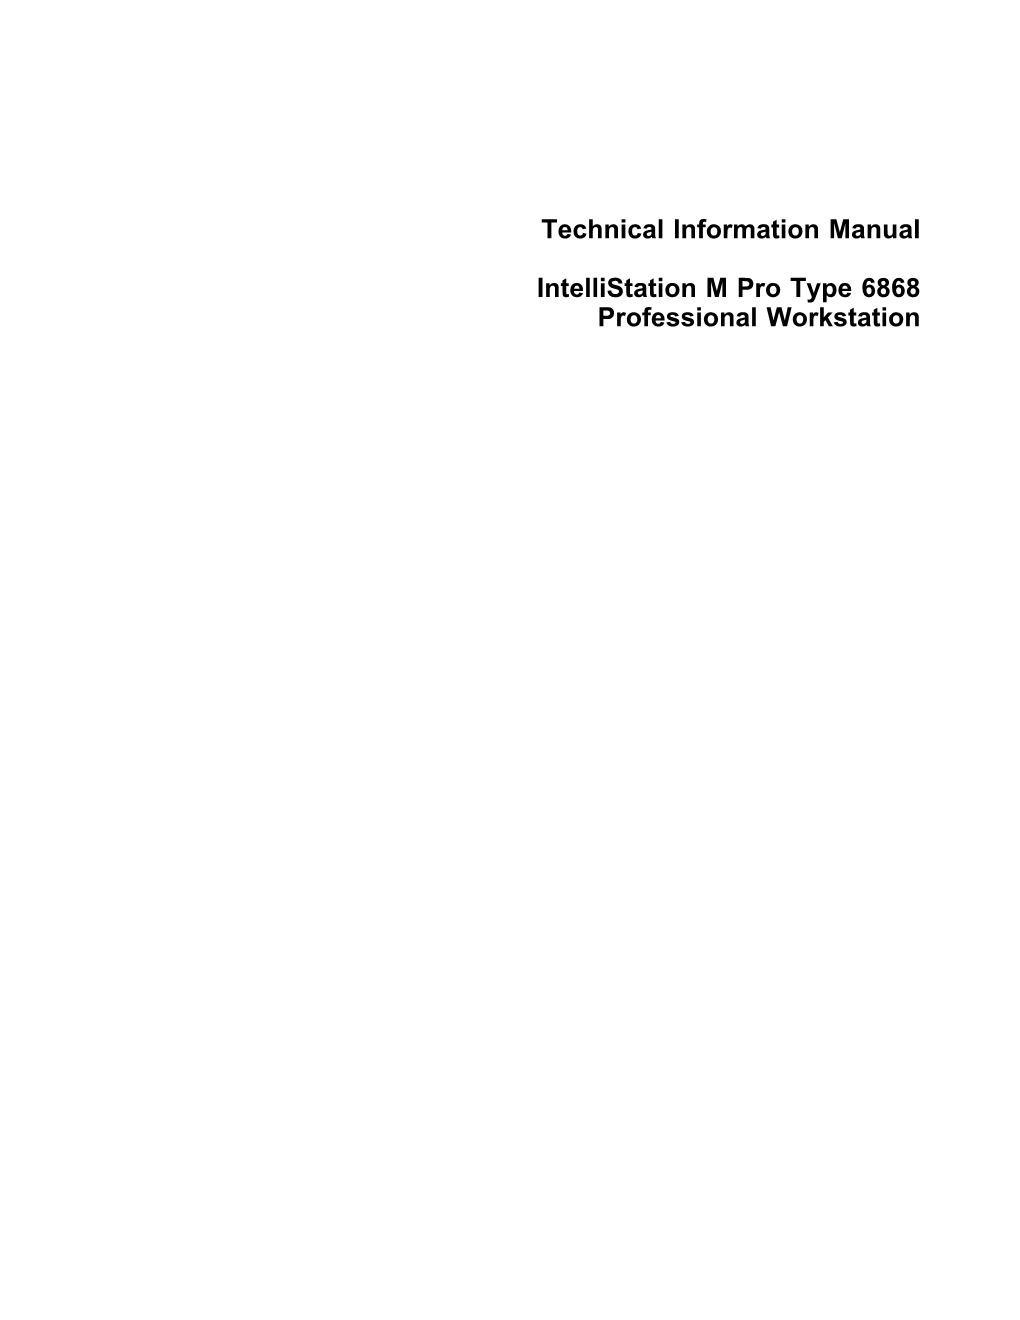 Technical Information Manual Intellistation M Pro Type 6868